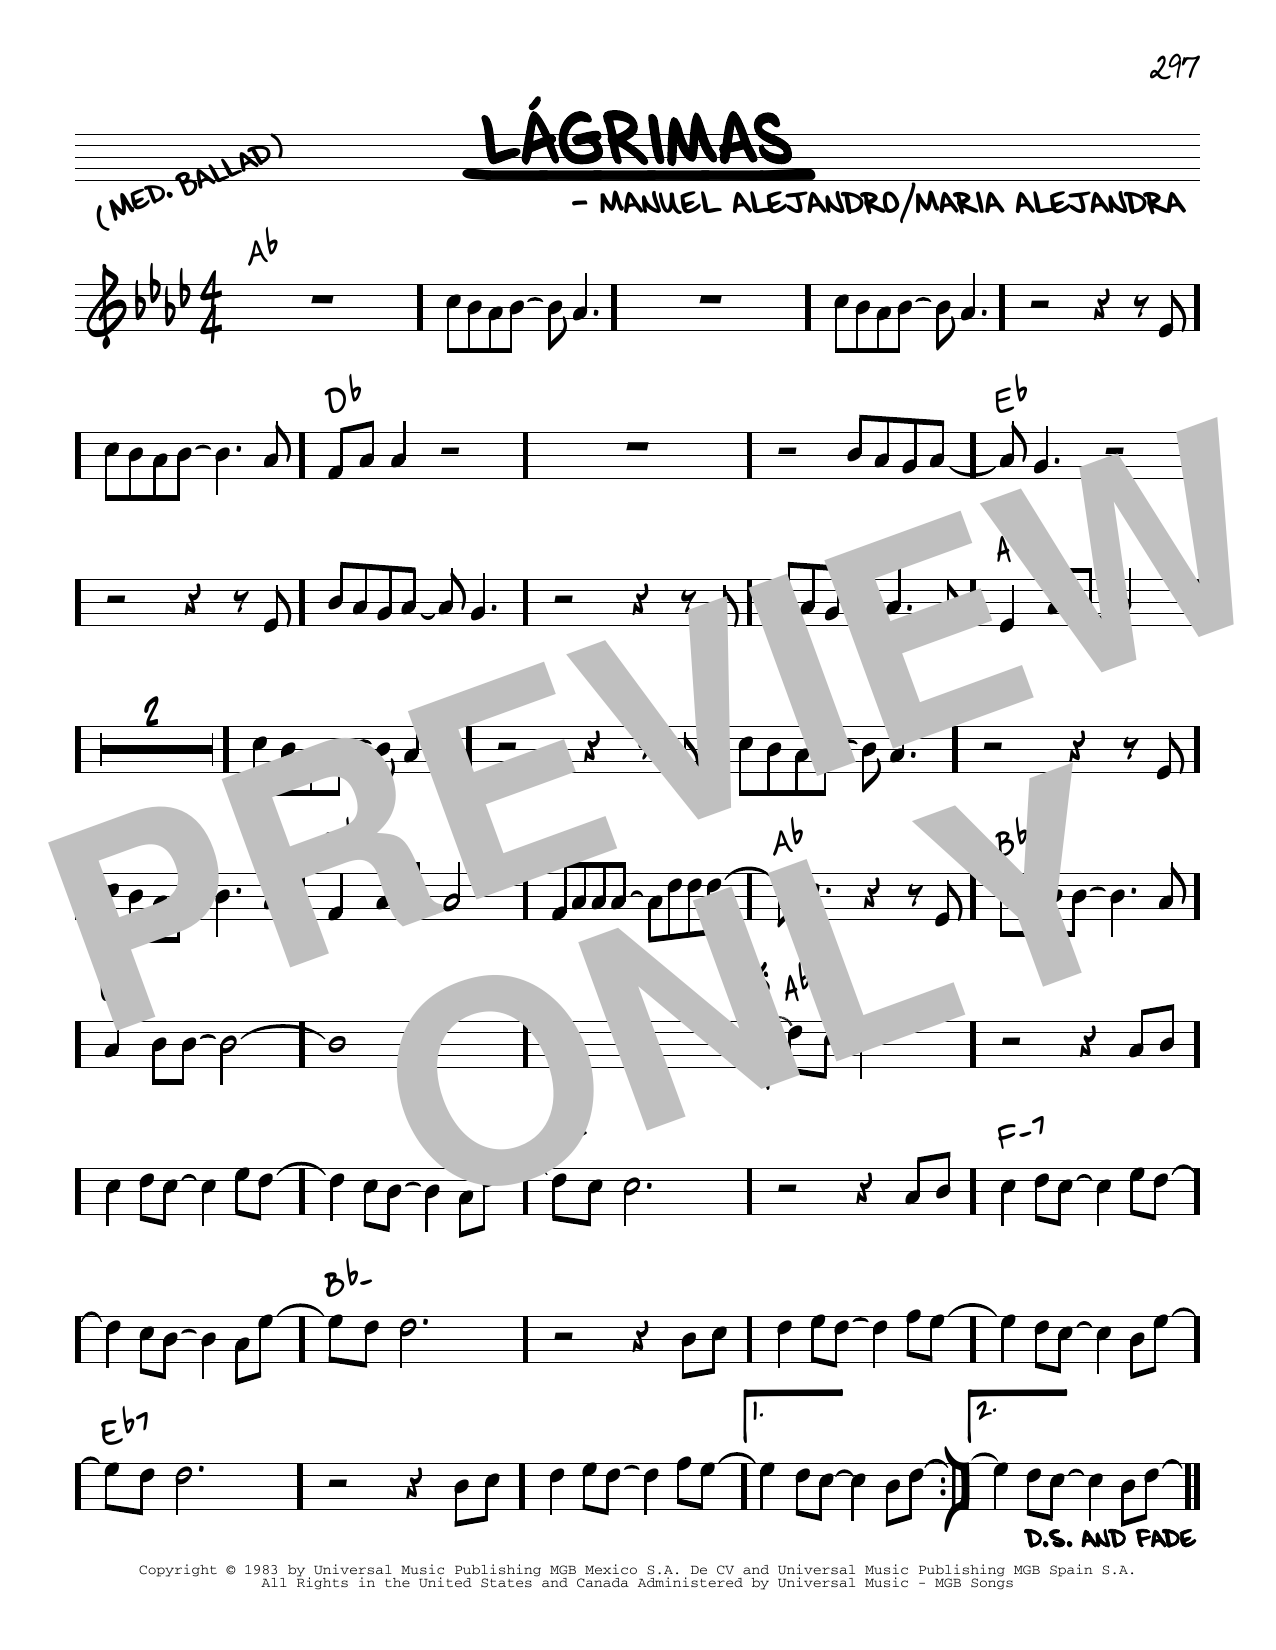 Manuel Alejandro Lágrimas Sheet Music Notes & Chords for Real Book – Melody & Chords - Download or Print PDF